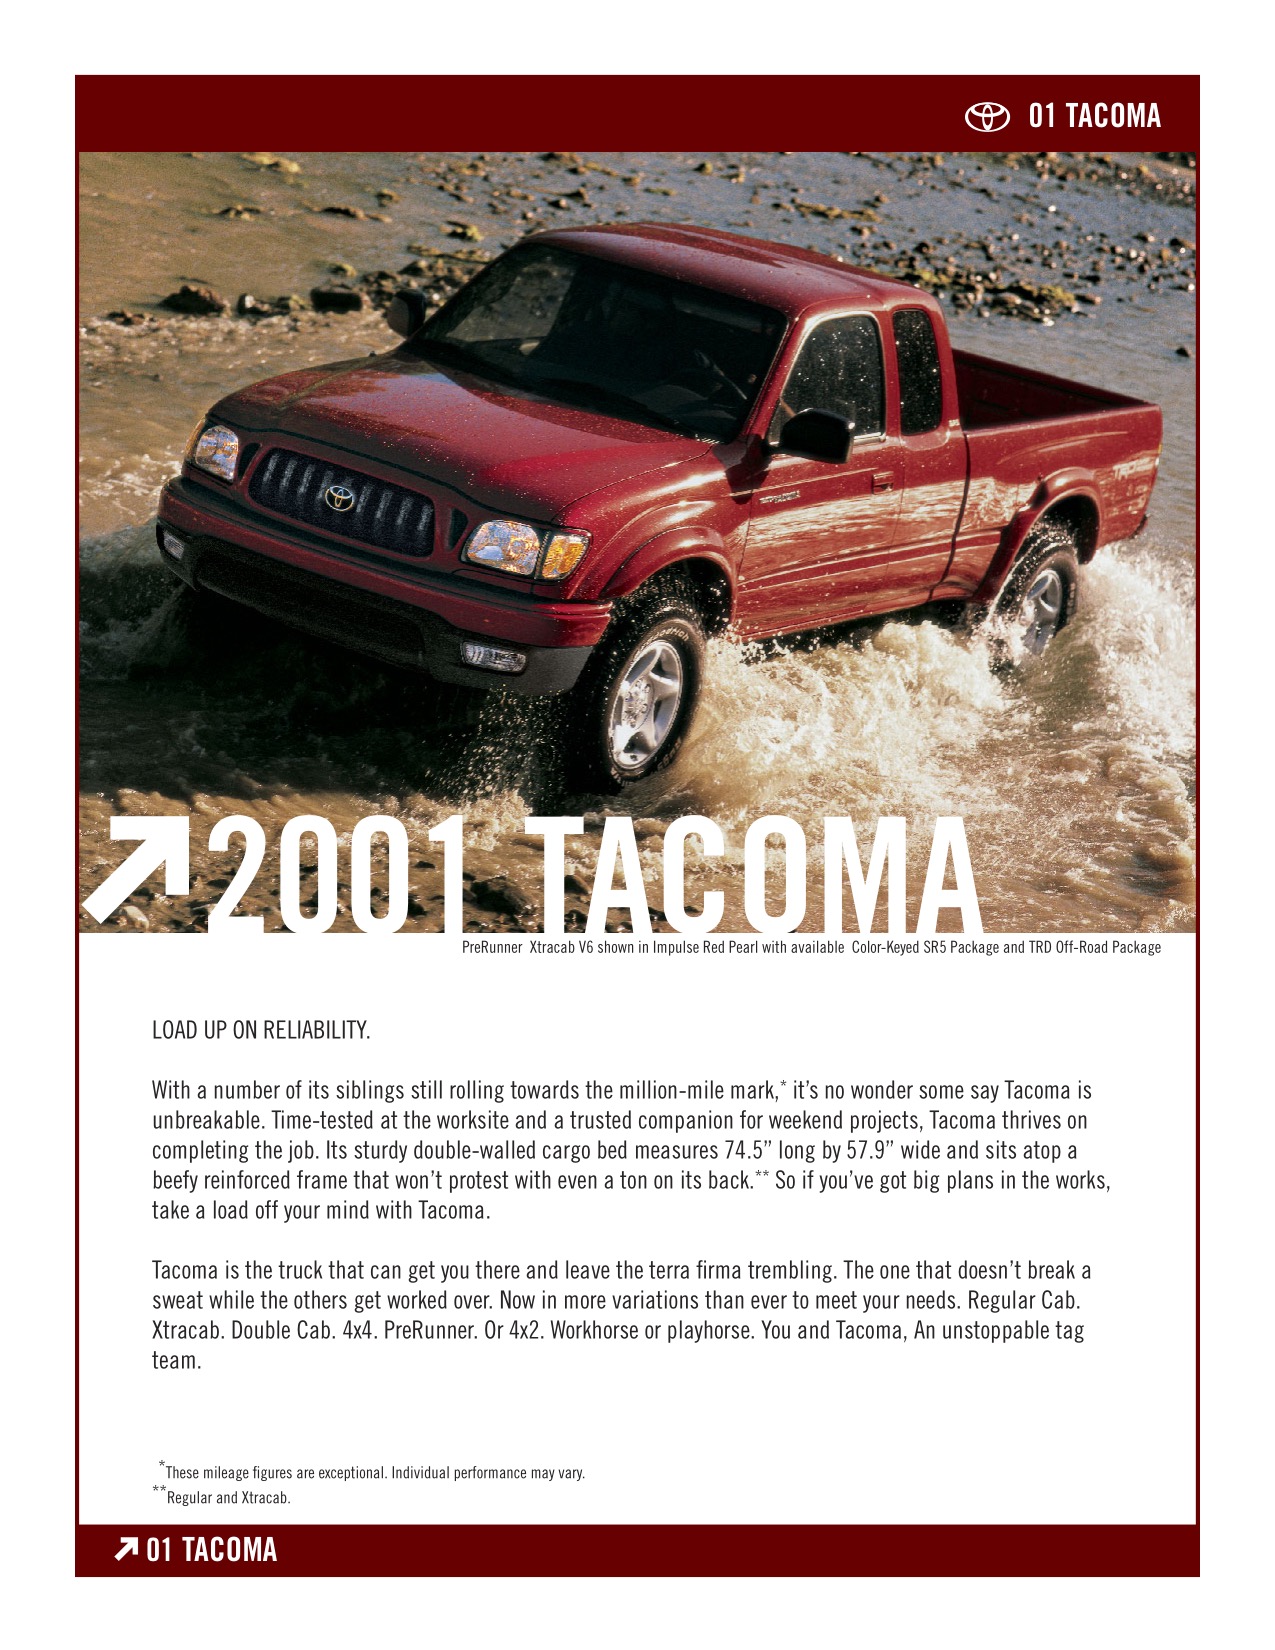 2001 Toyota Tacoma Brochure